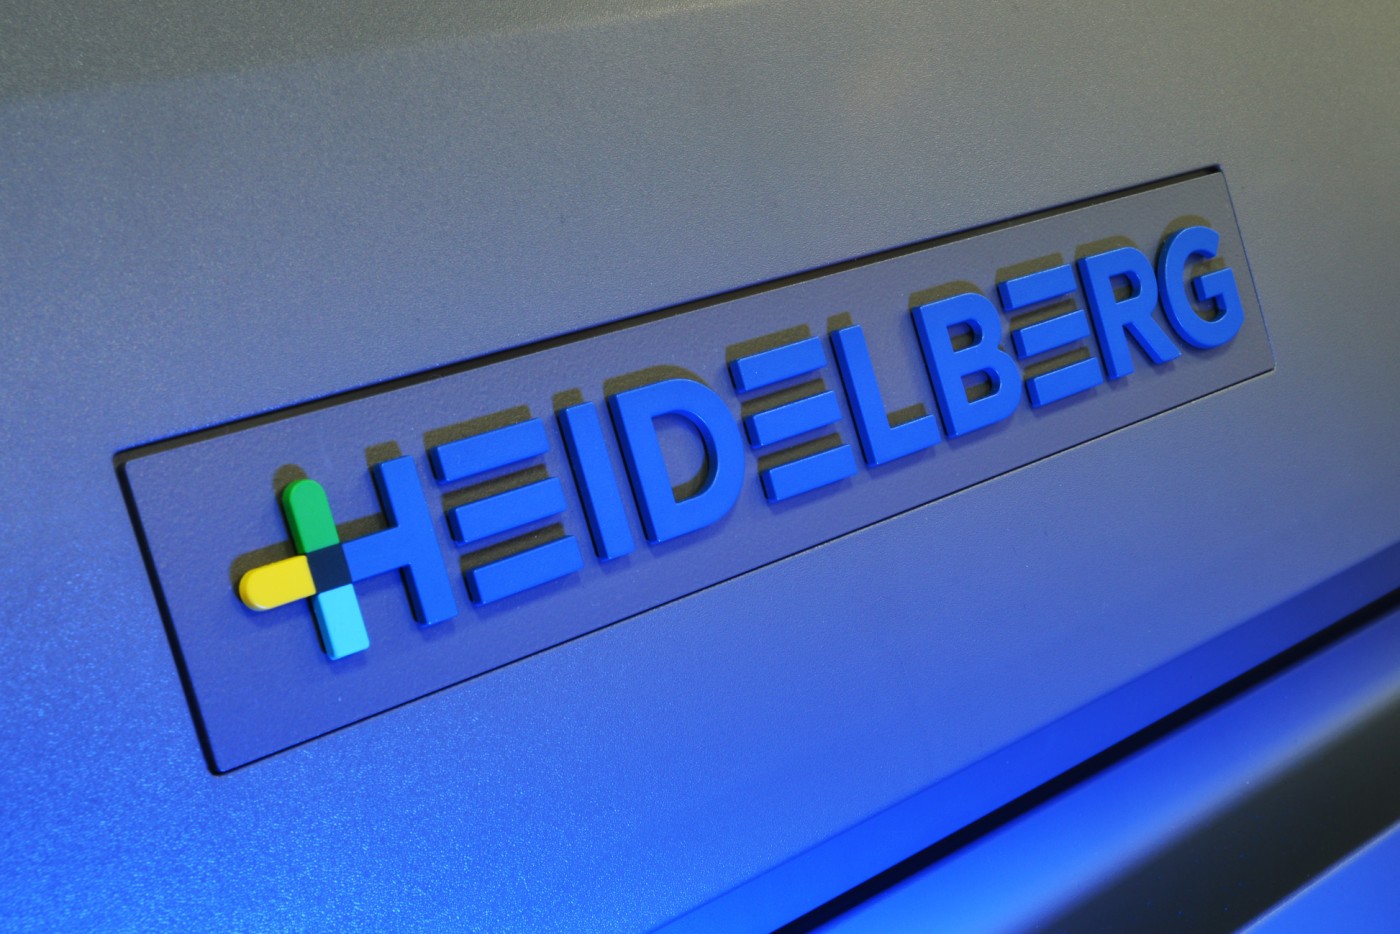 Heidelberg_logo_on_machine